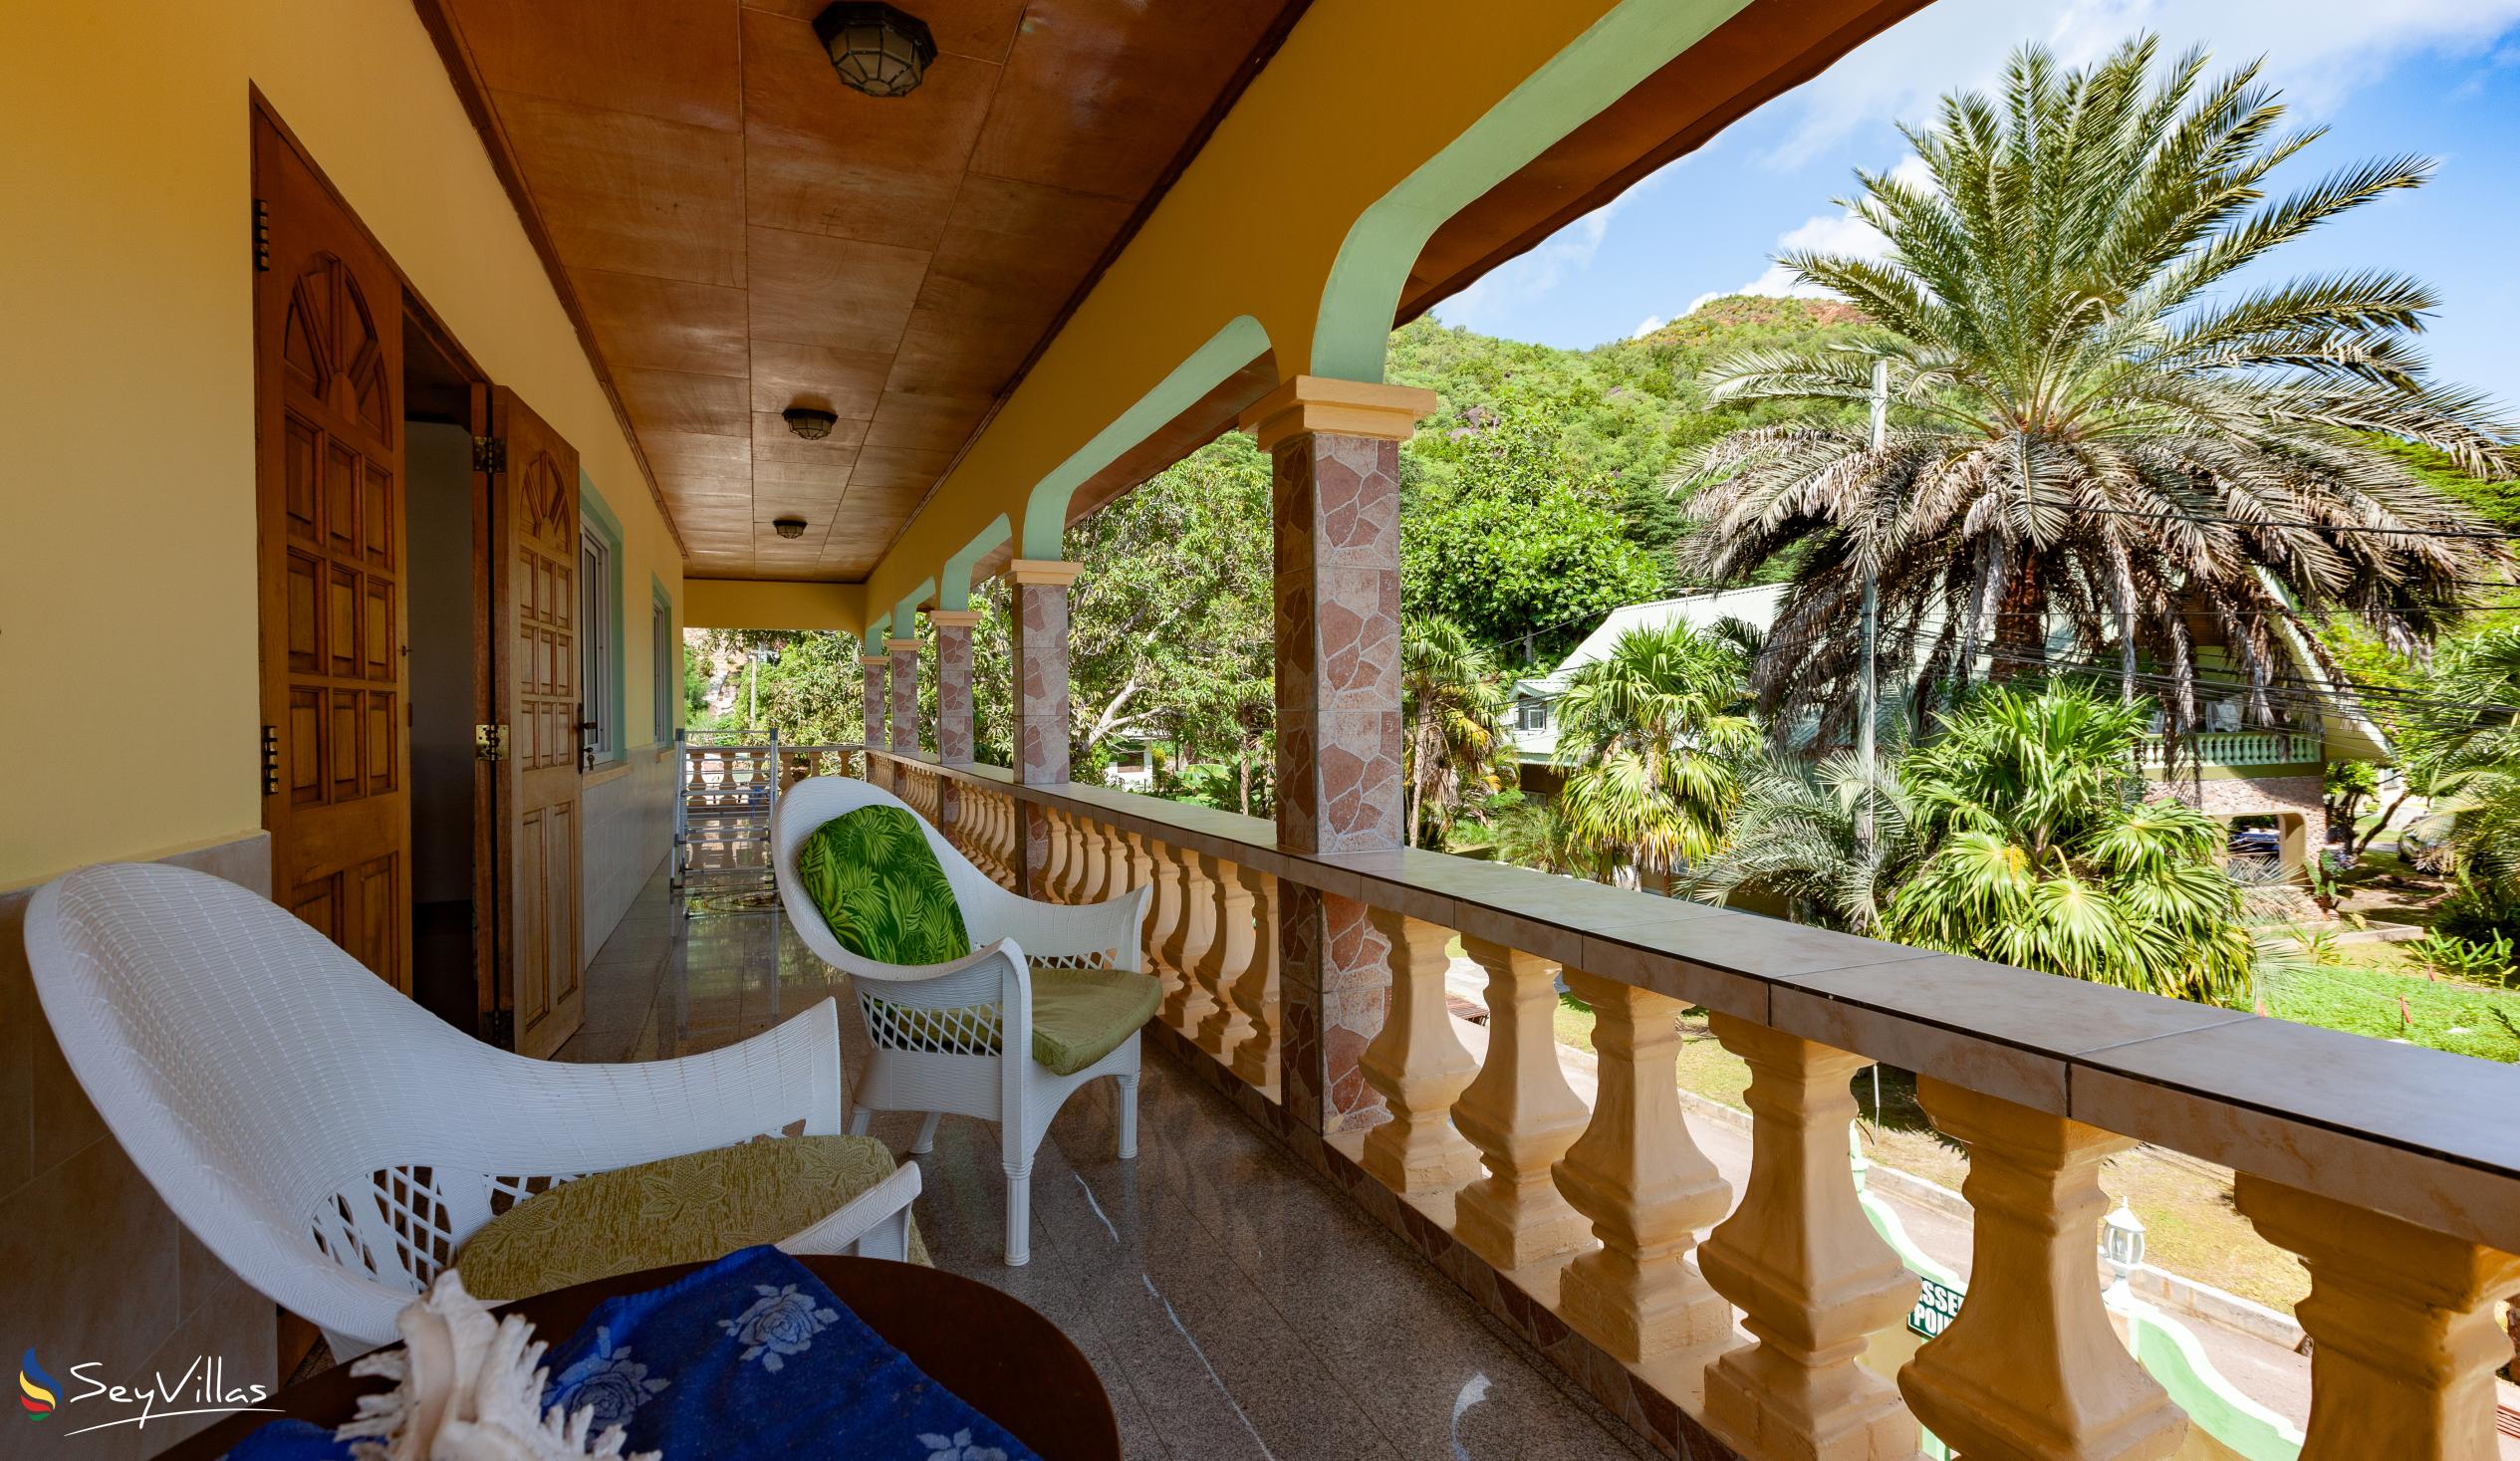 Photo 108: Villa Bananier - Superior Room - Praslin (Seychelles)